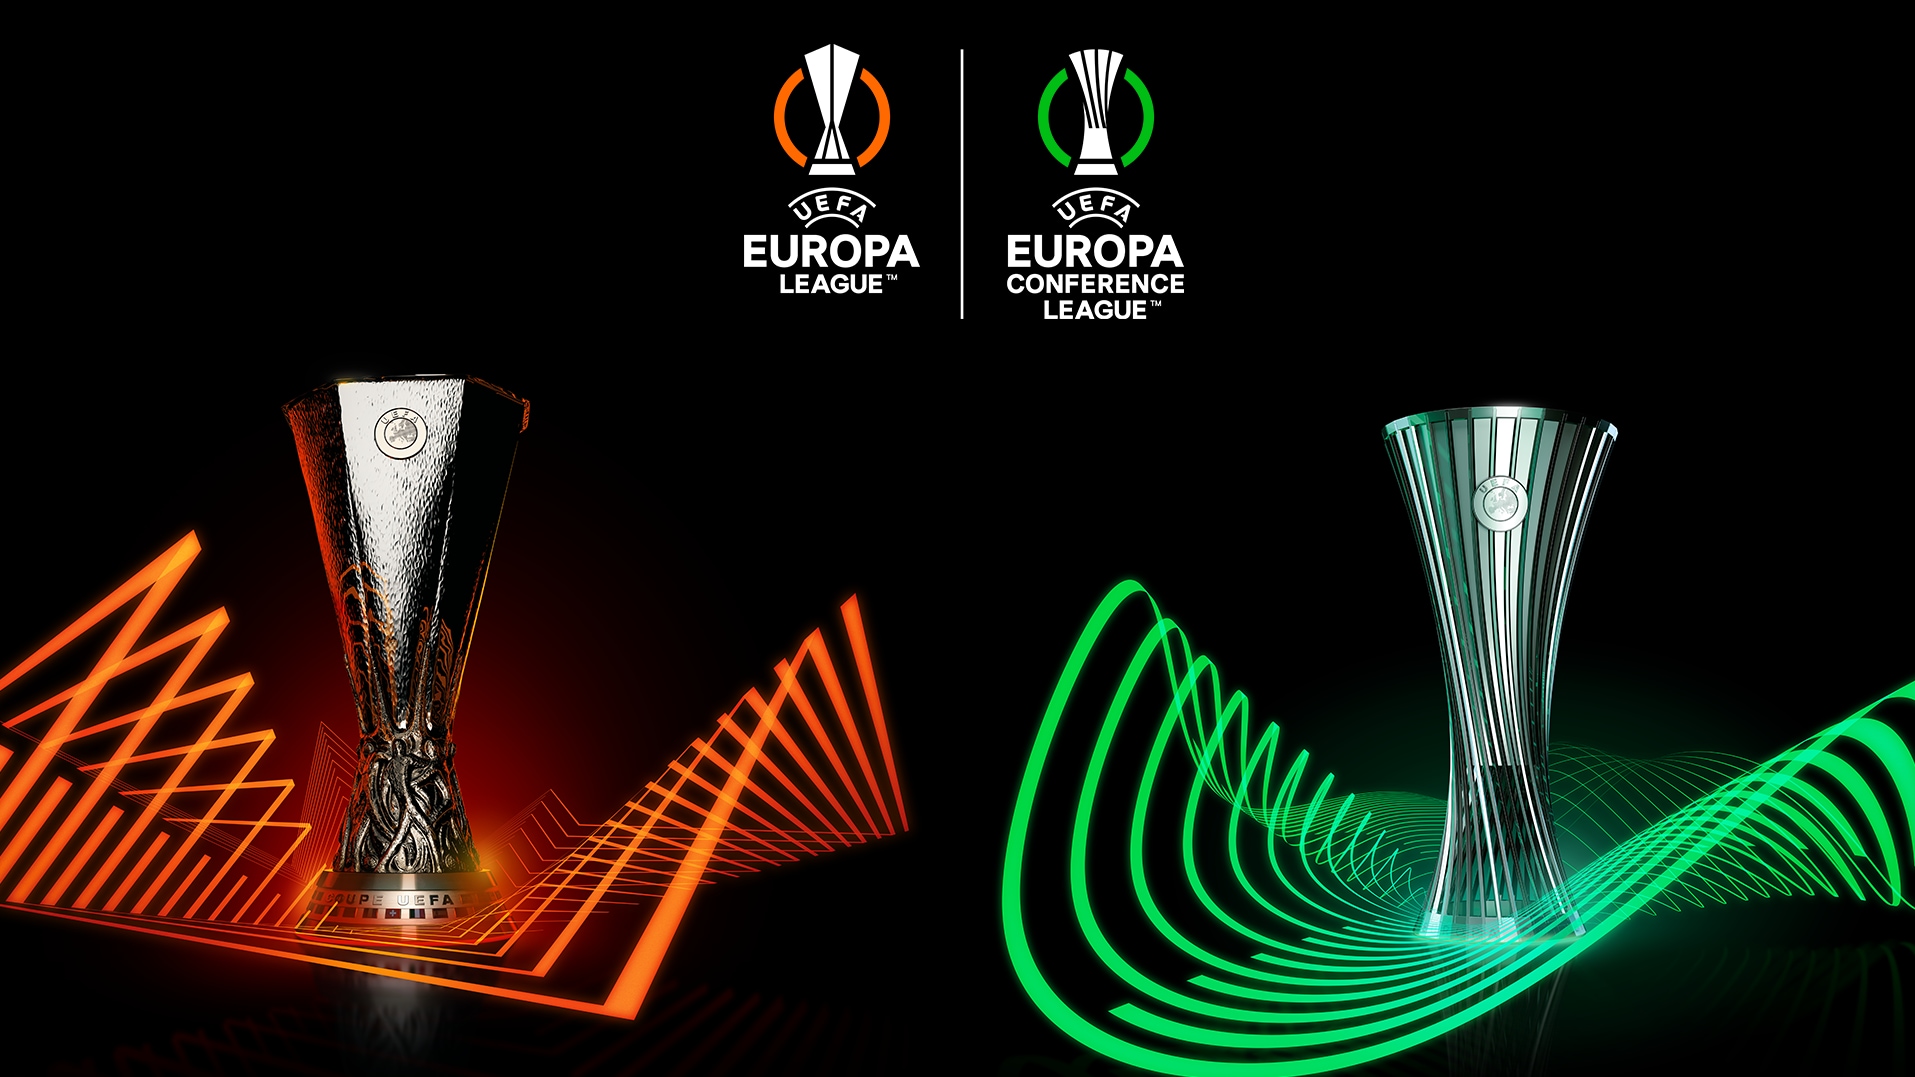 Uefa europa conference league